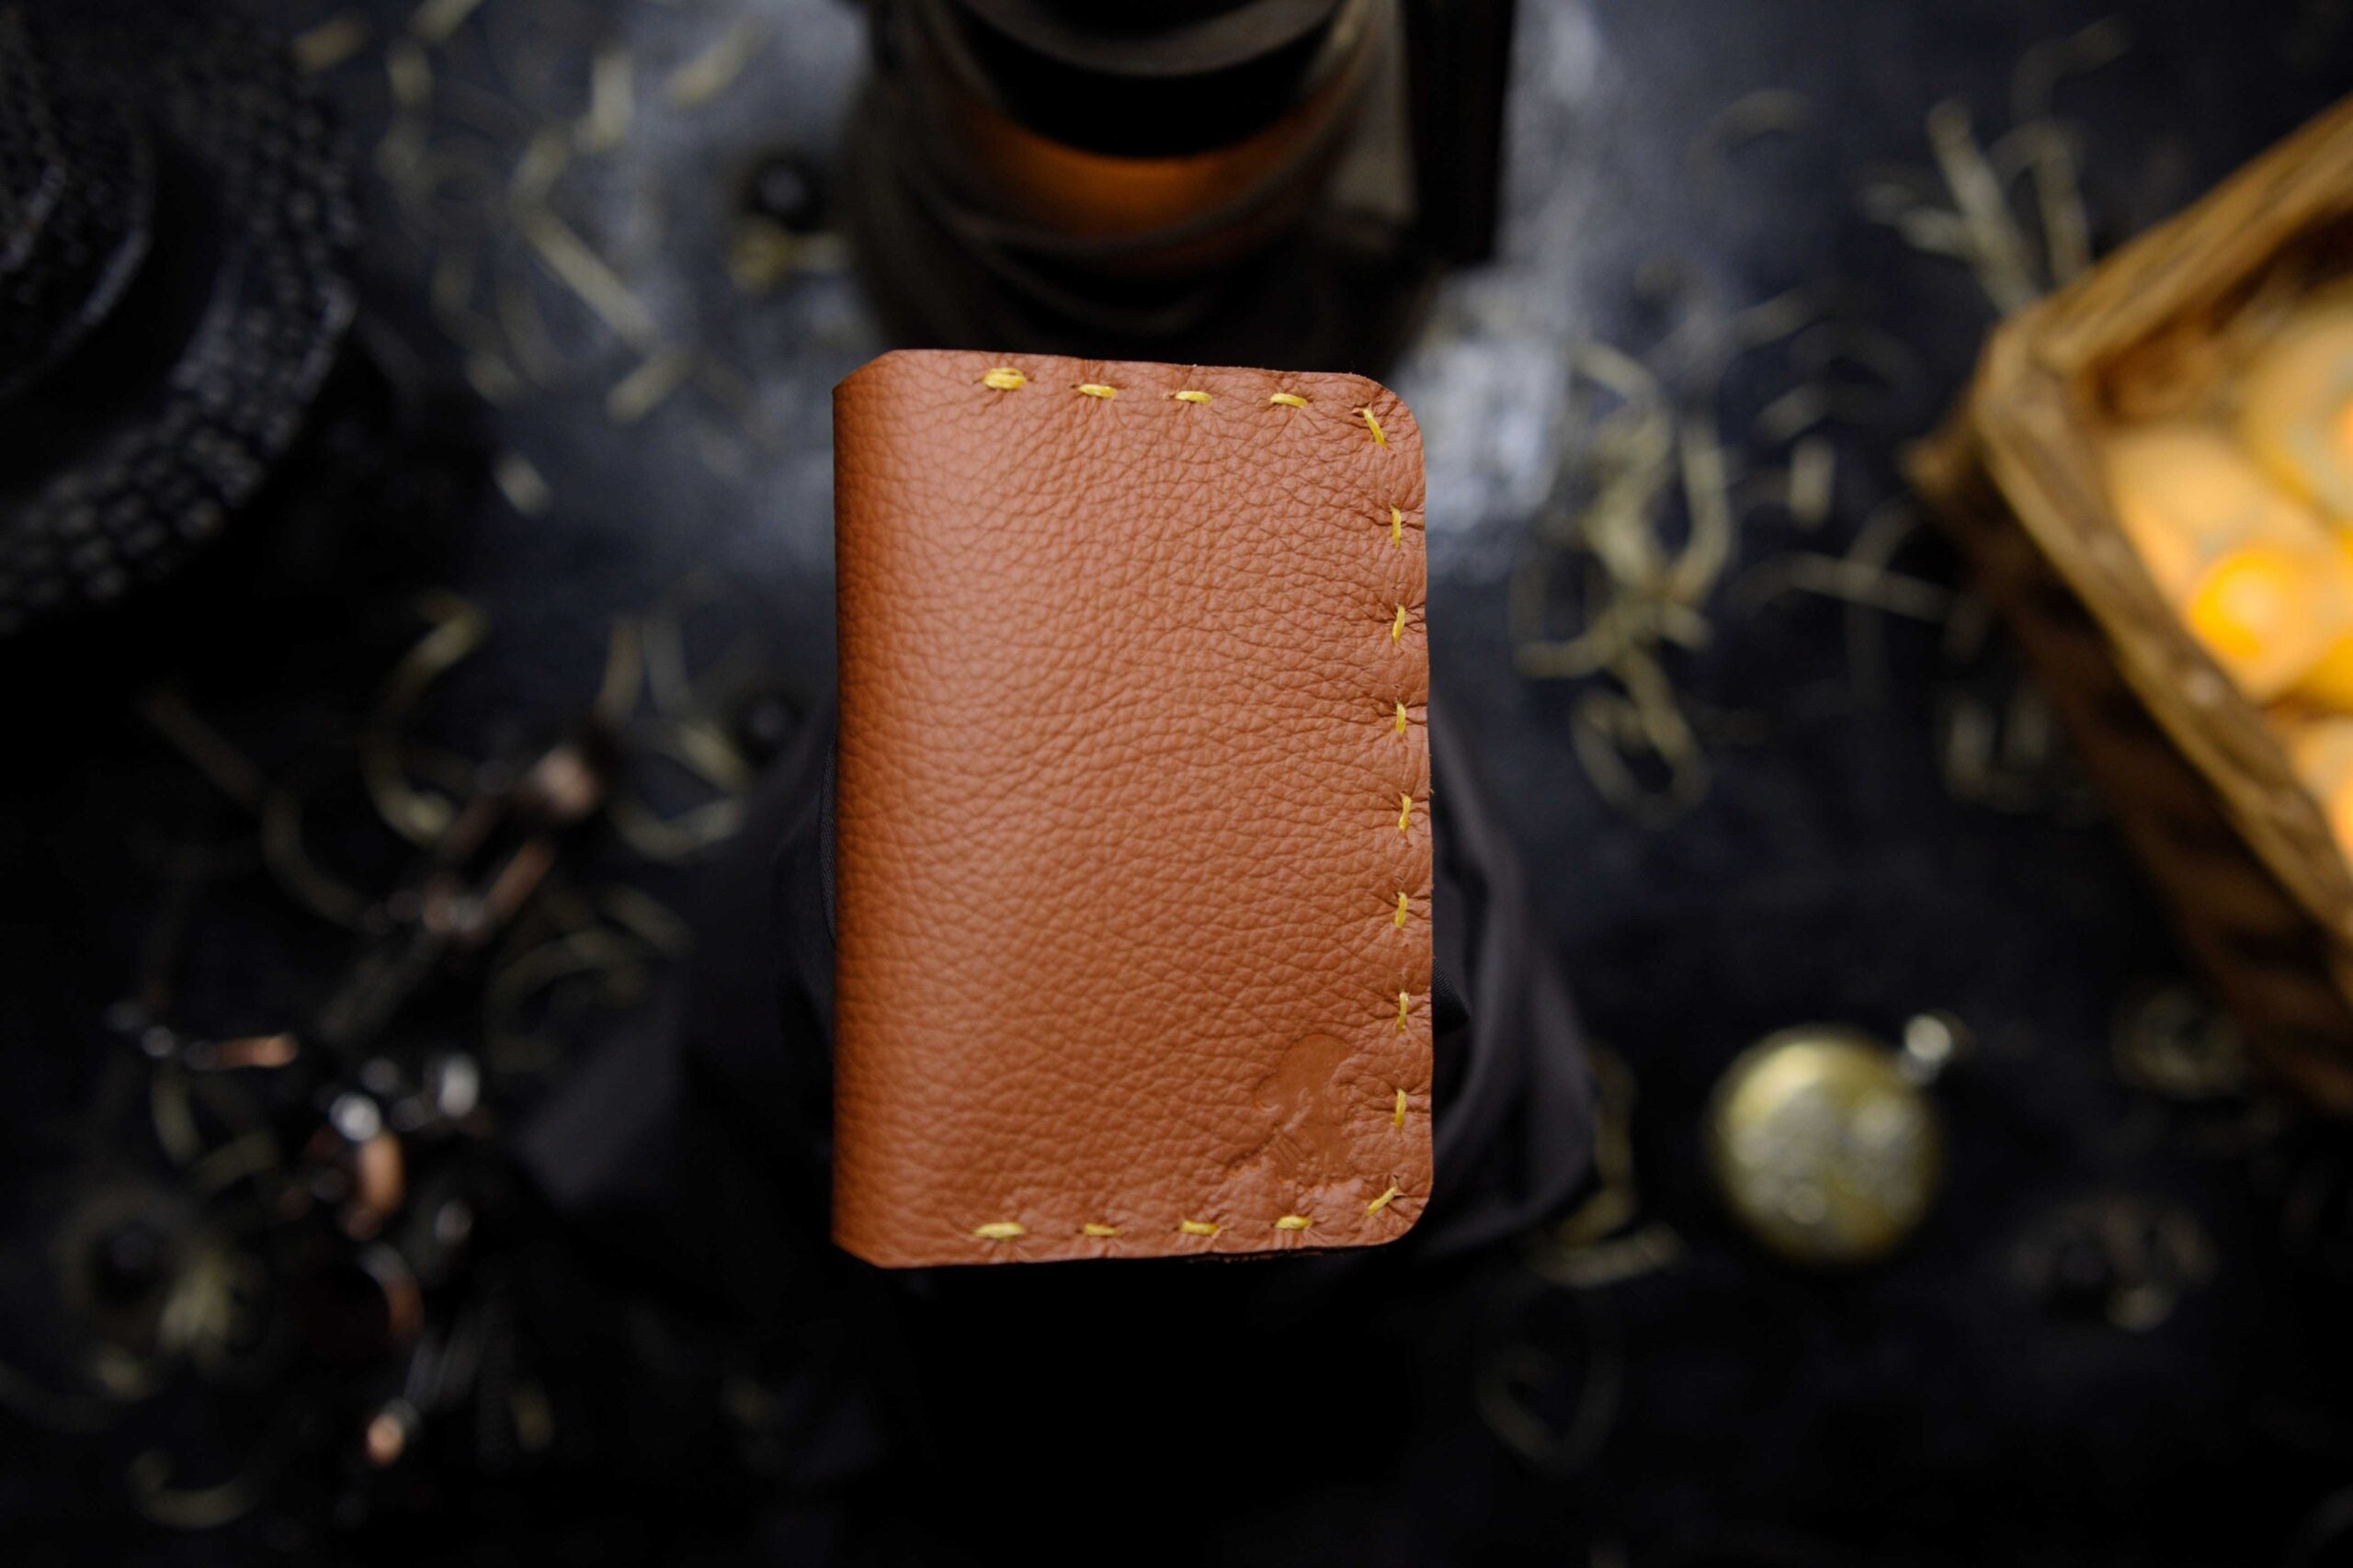 The Audace – Orange Tan Smart Wallet